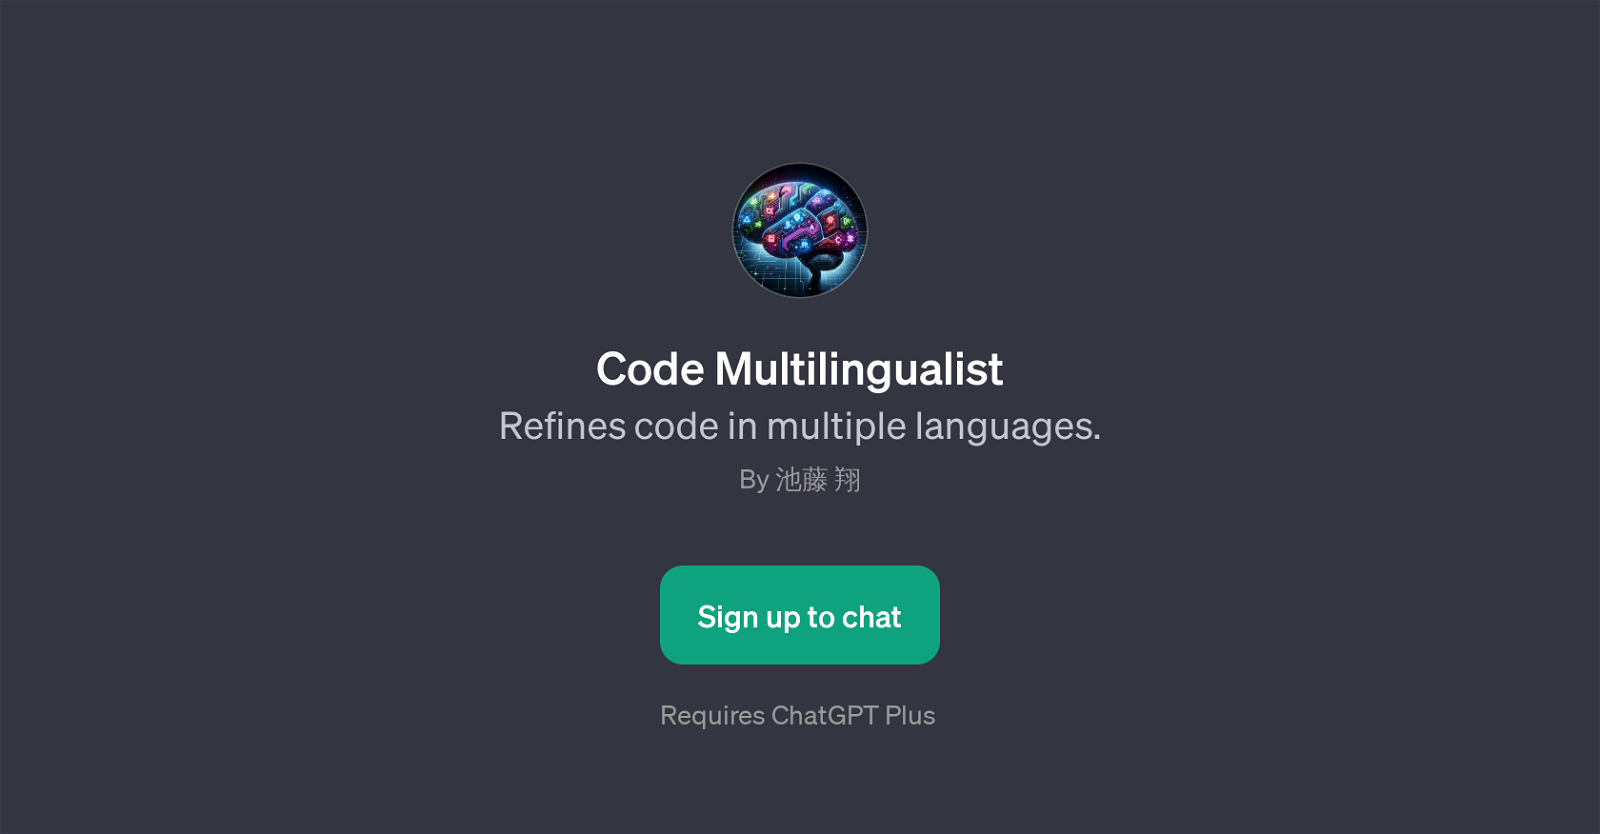 Code Multilingualist website